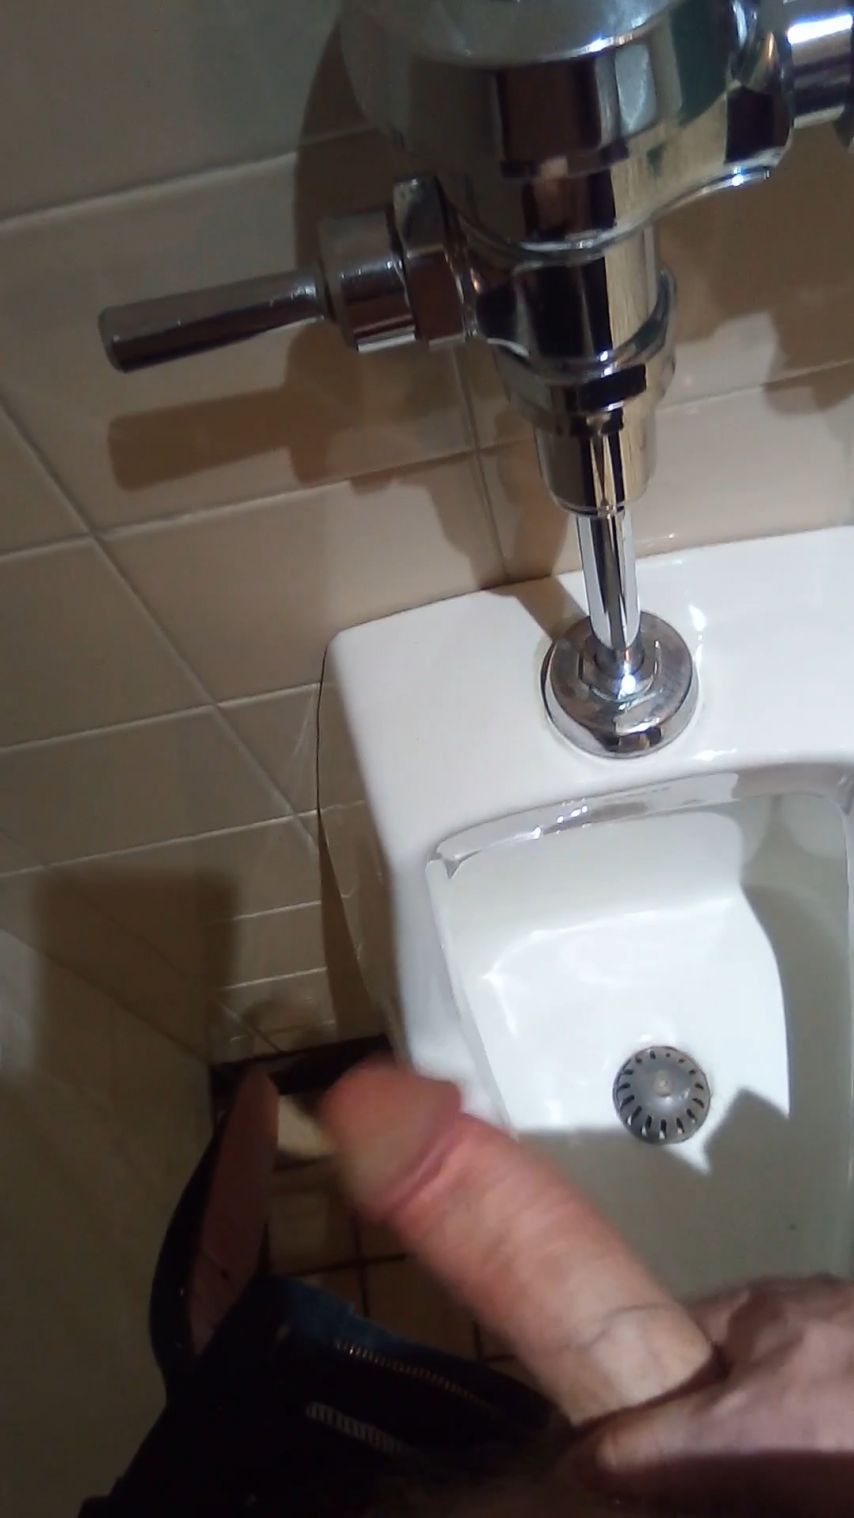 Public urinal stroking